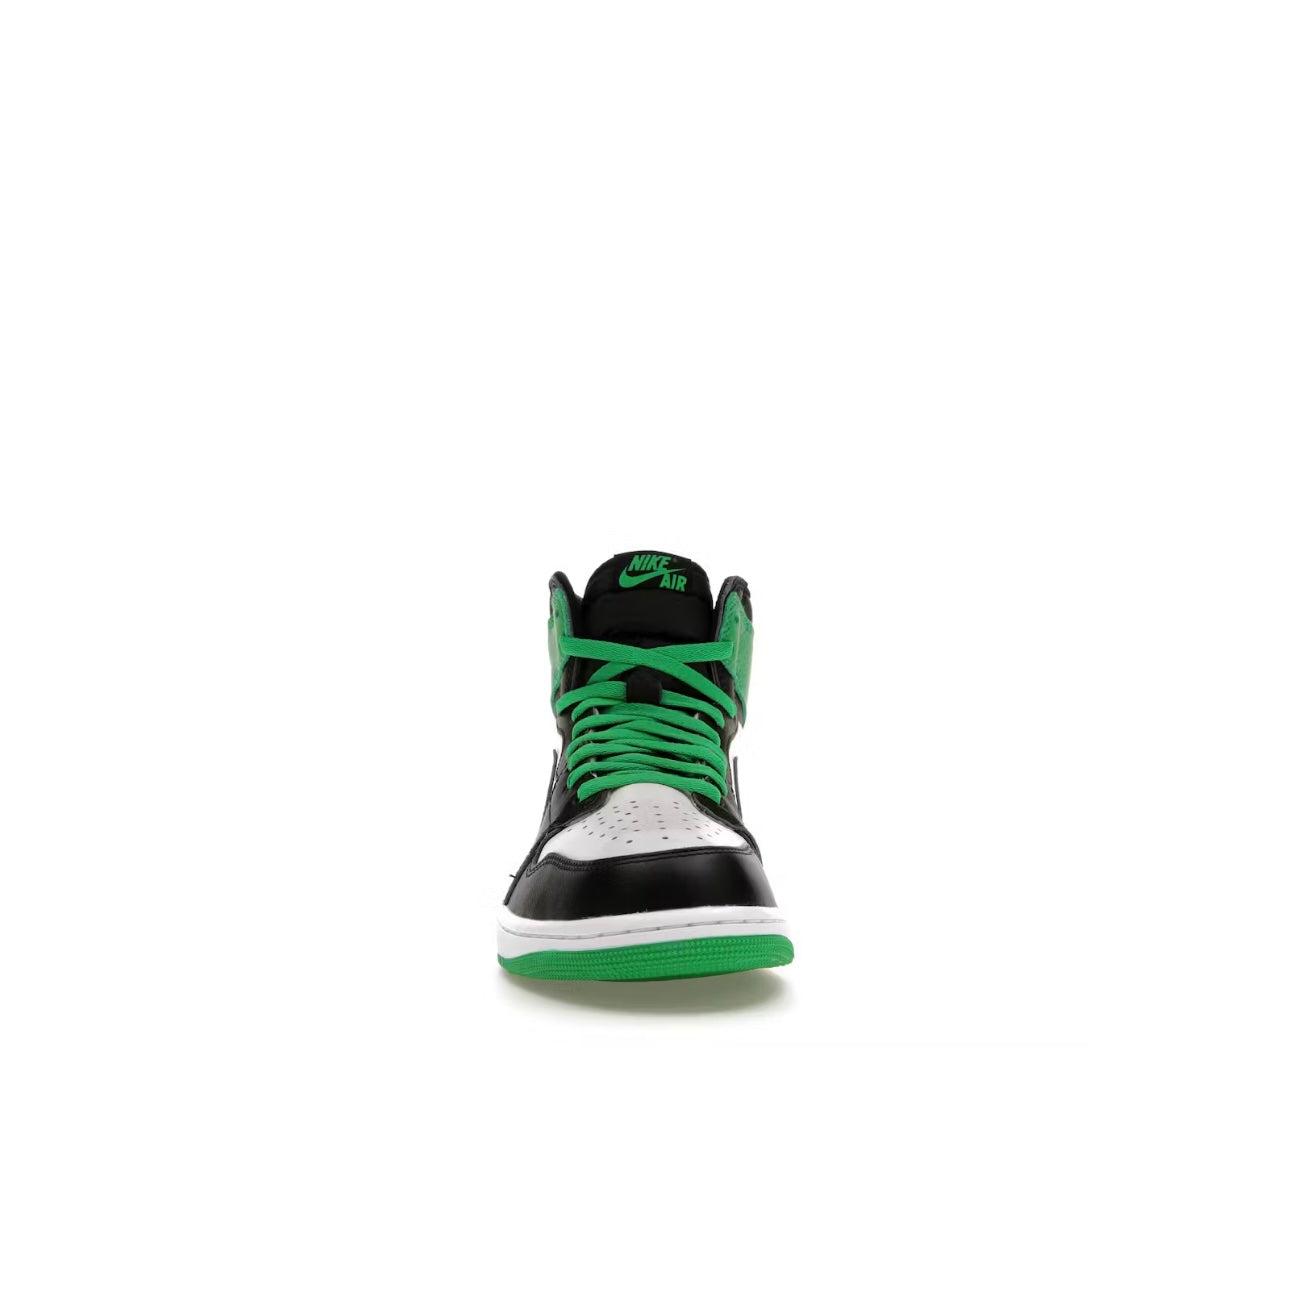 Air Jordan lucky green - PENGUIN SHOES Penguin shoes